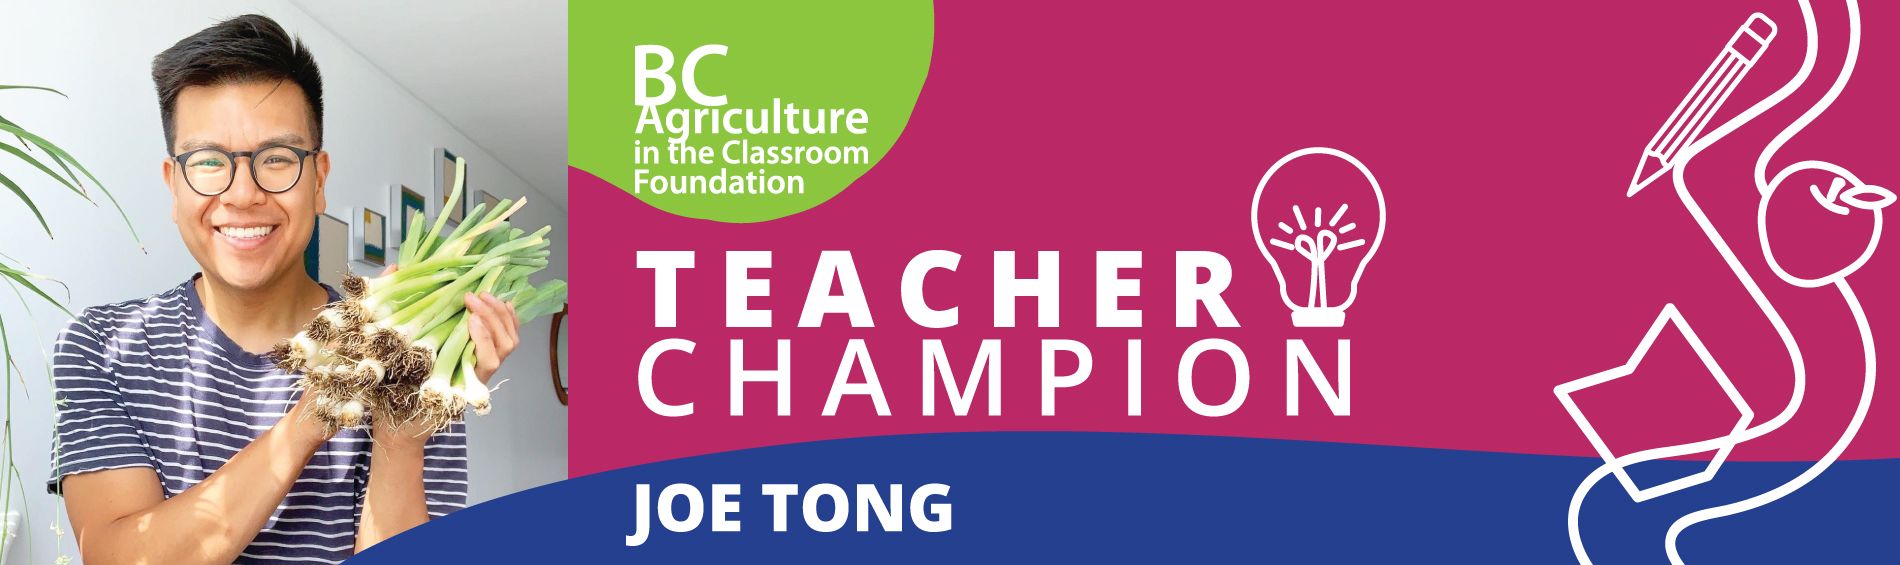 Joe Tong - Teacher Champion